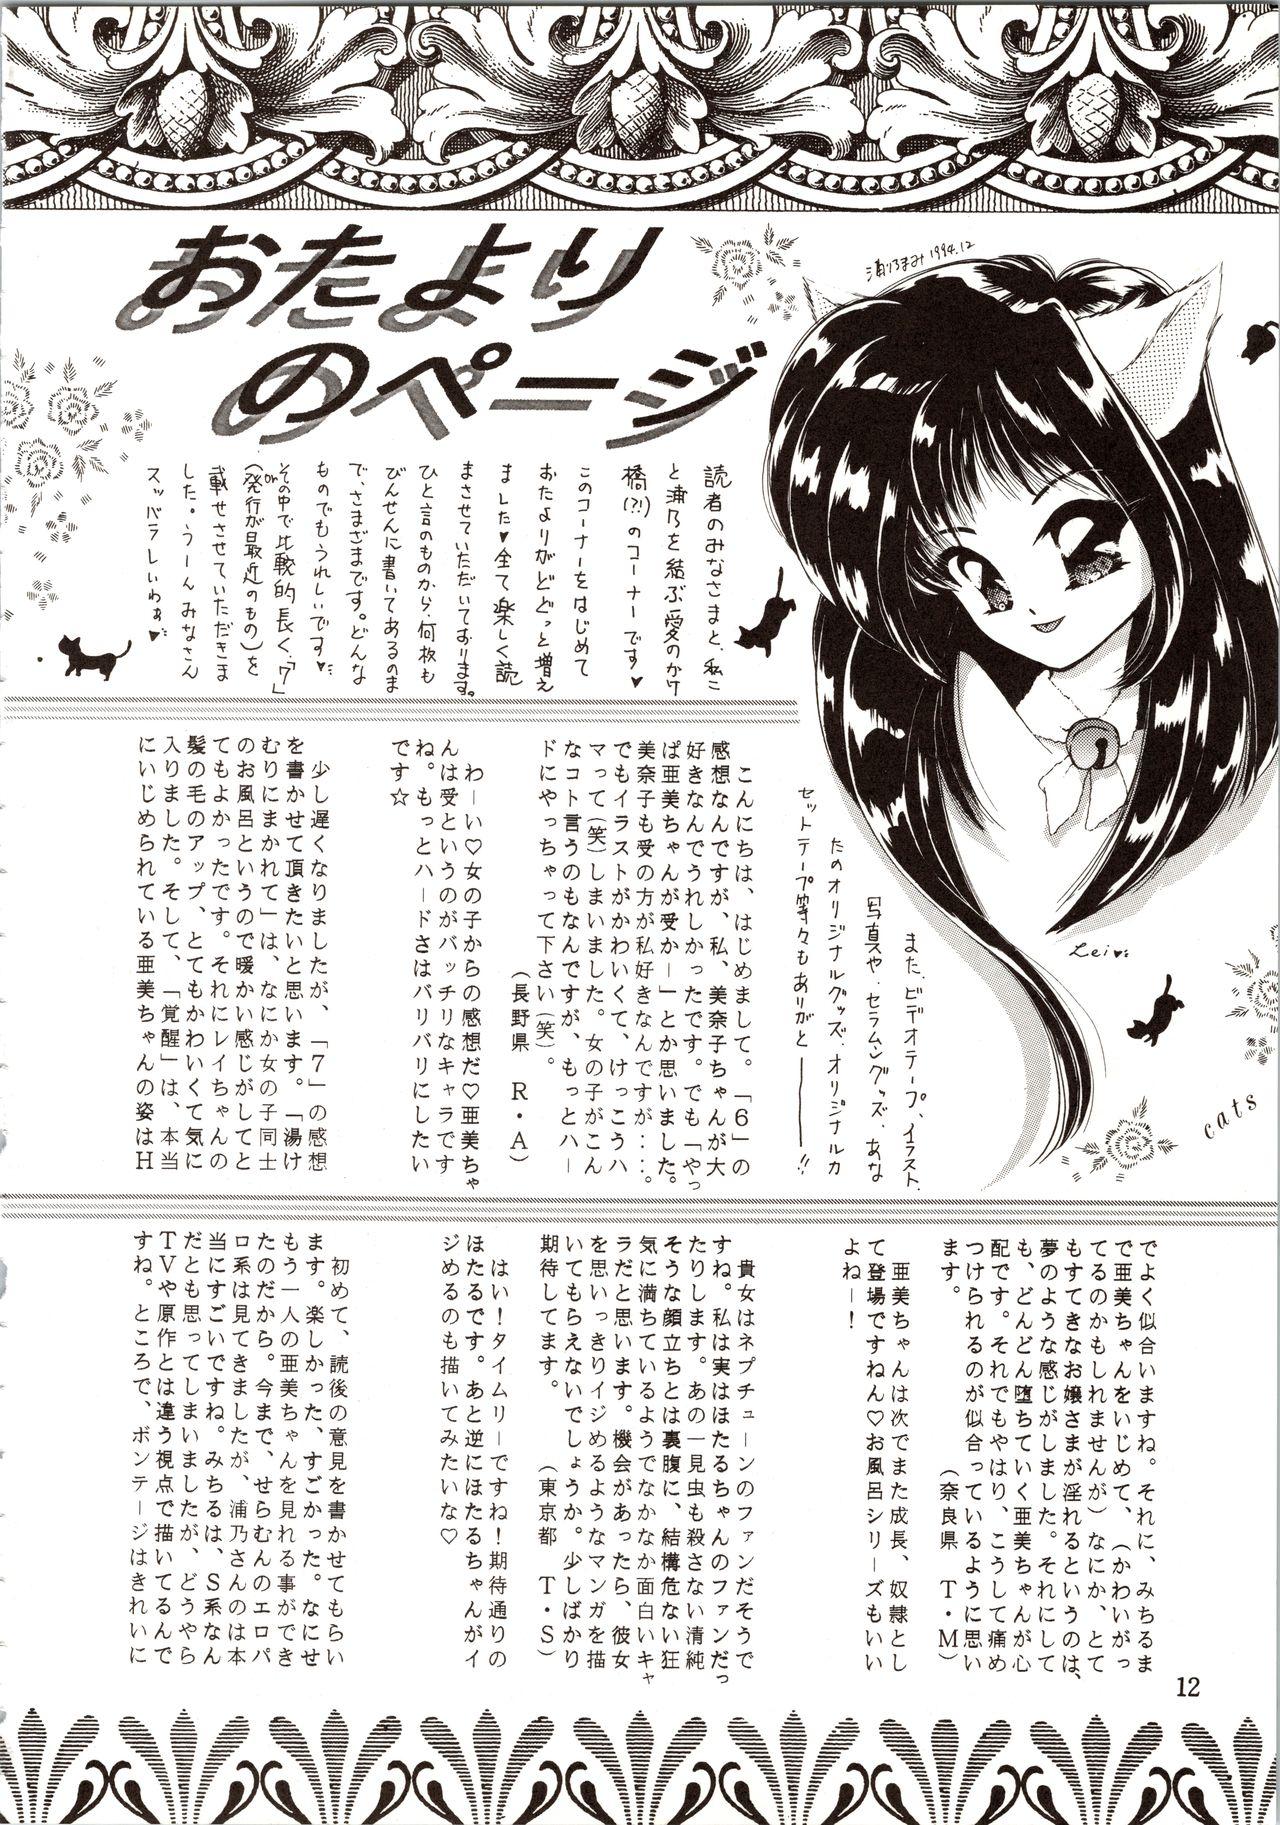 Suckingcock Tsukiyo no Tawamure 8 - Sailor moon Rica - Page 12